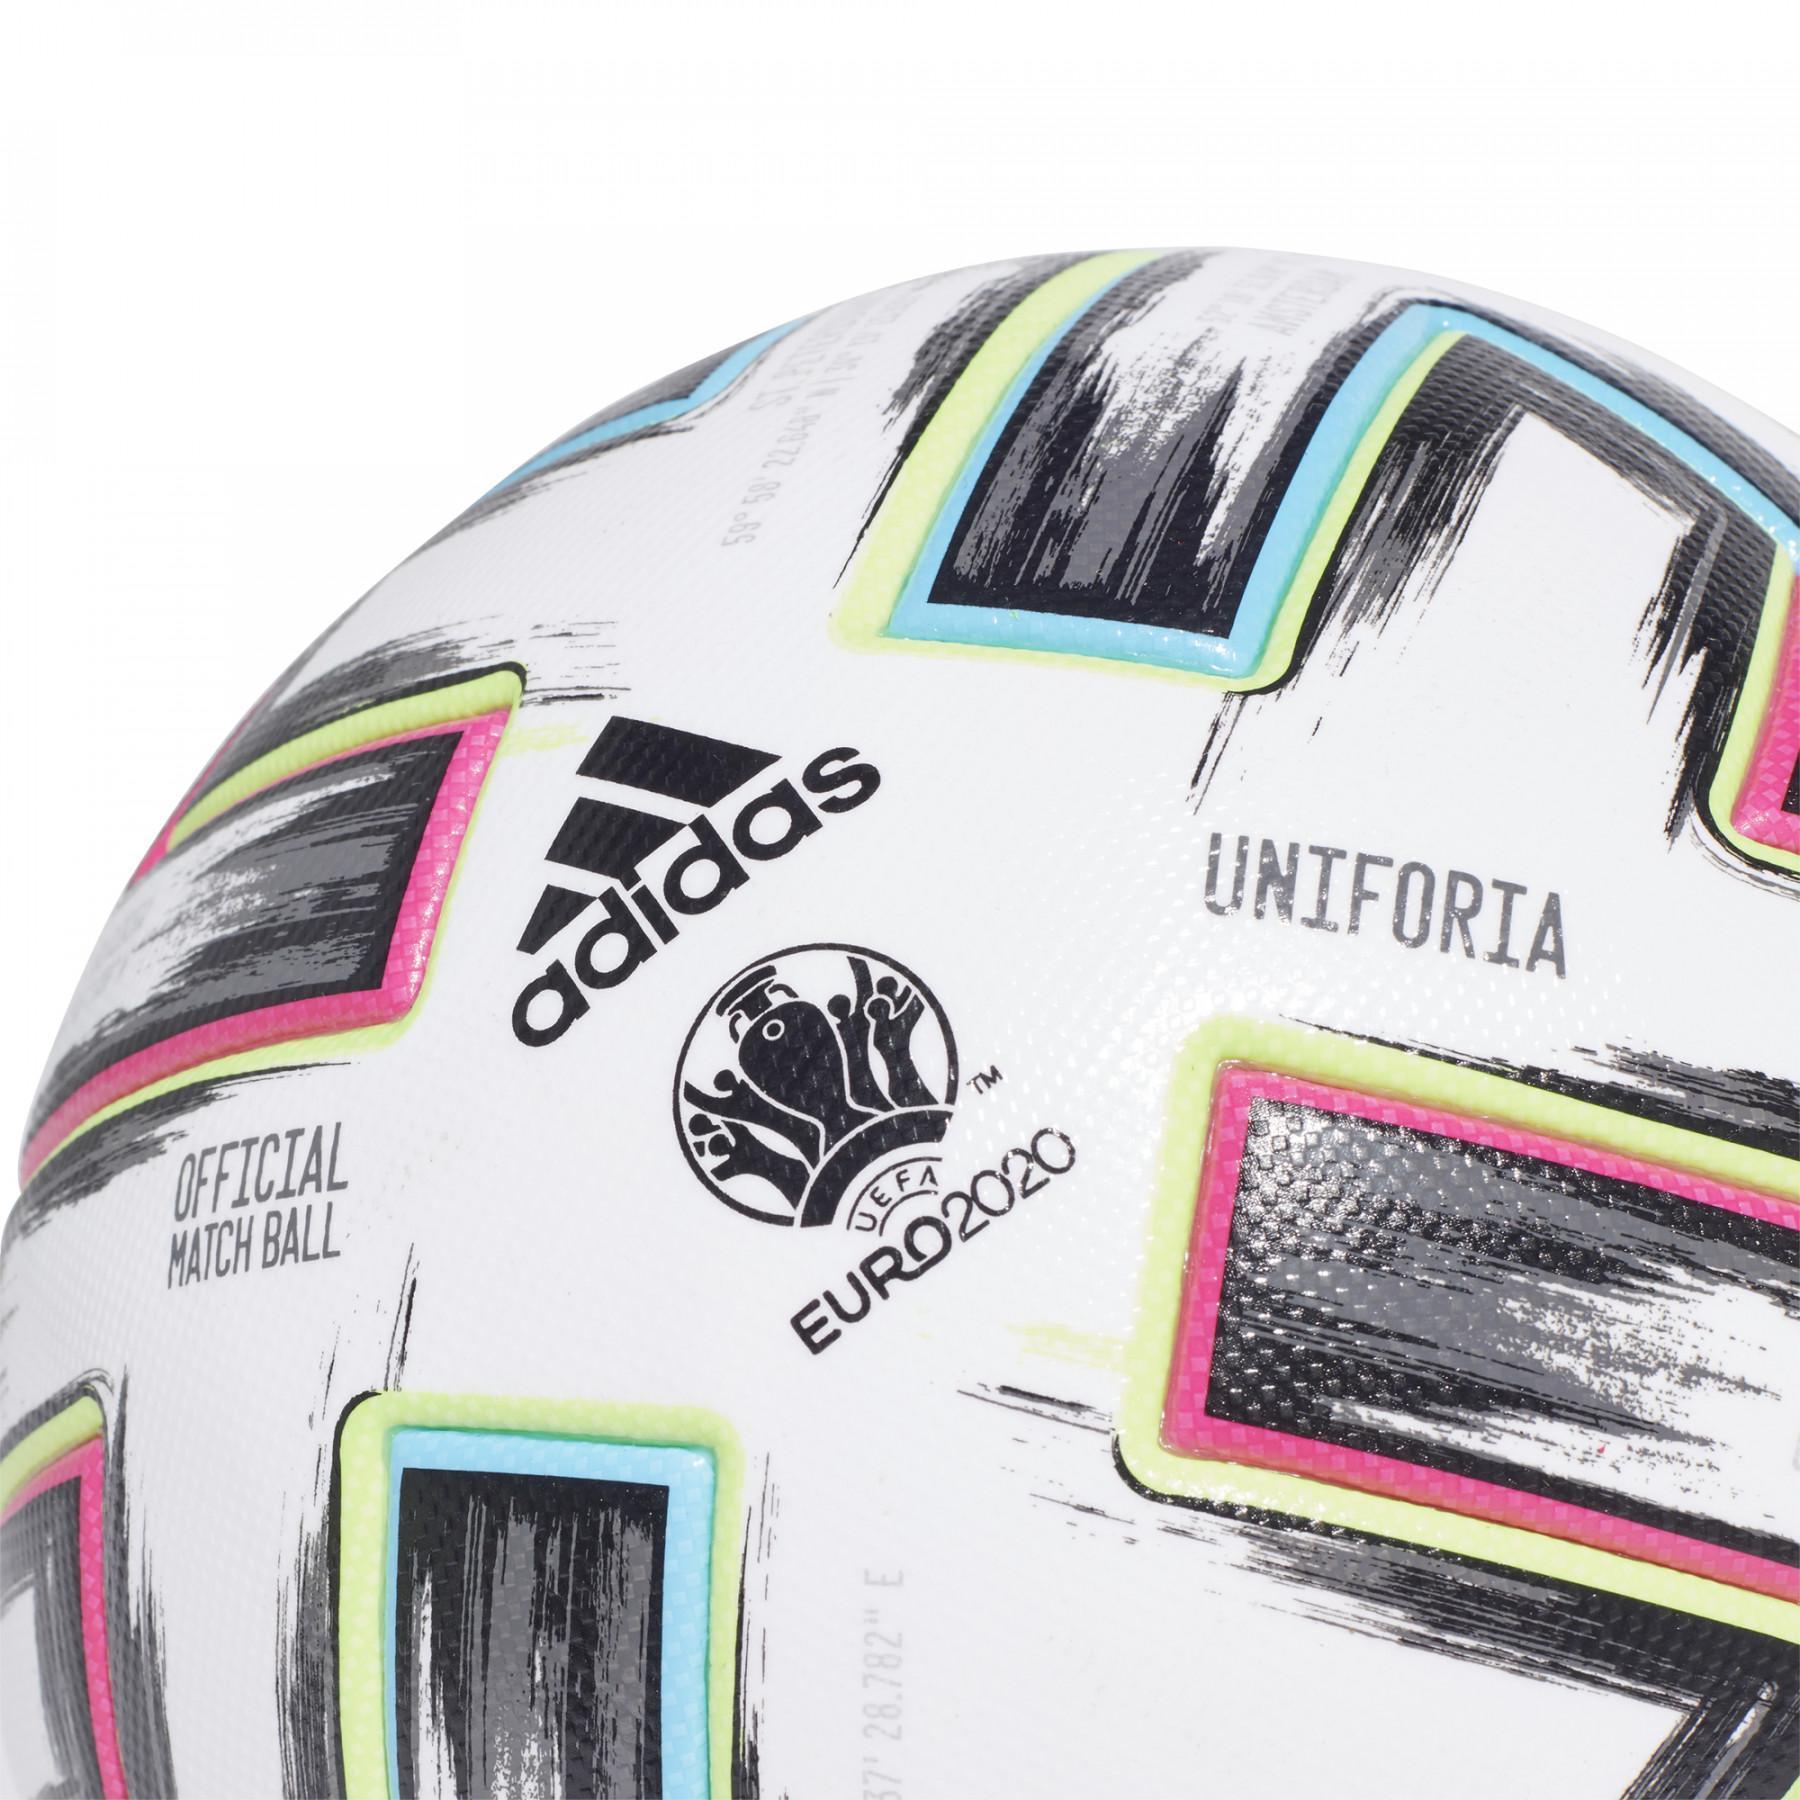 Palloncino Adidas Uniforia Pro Euro 2020